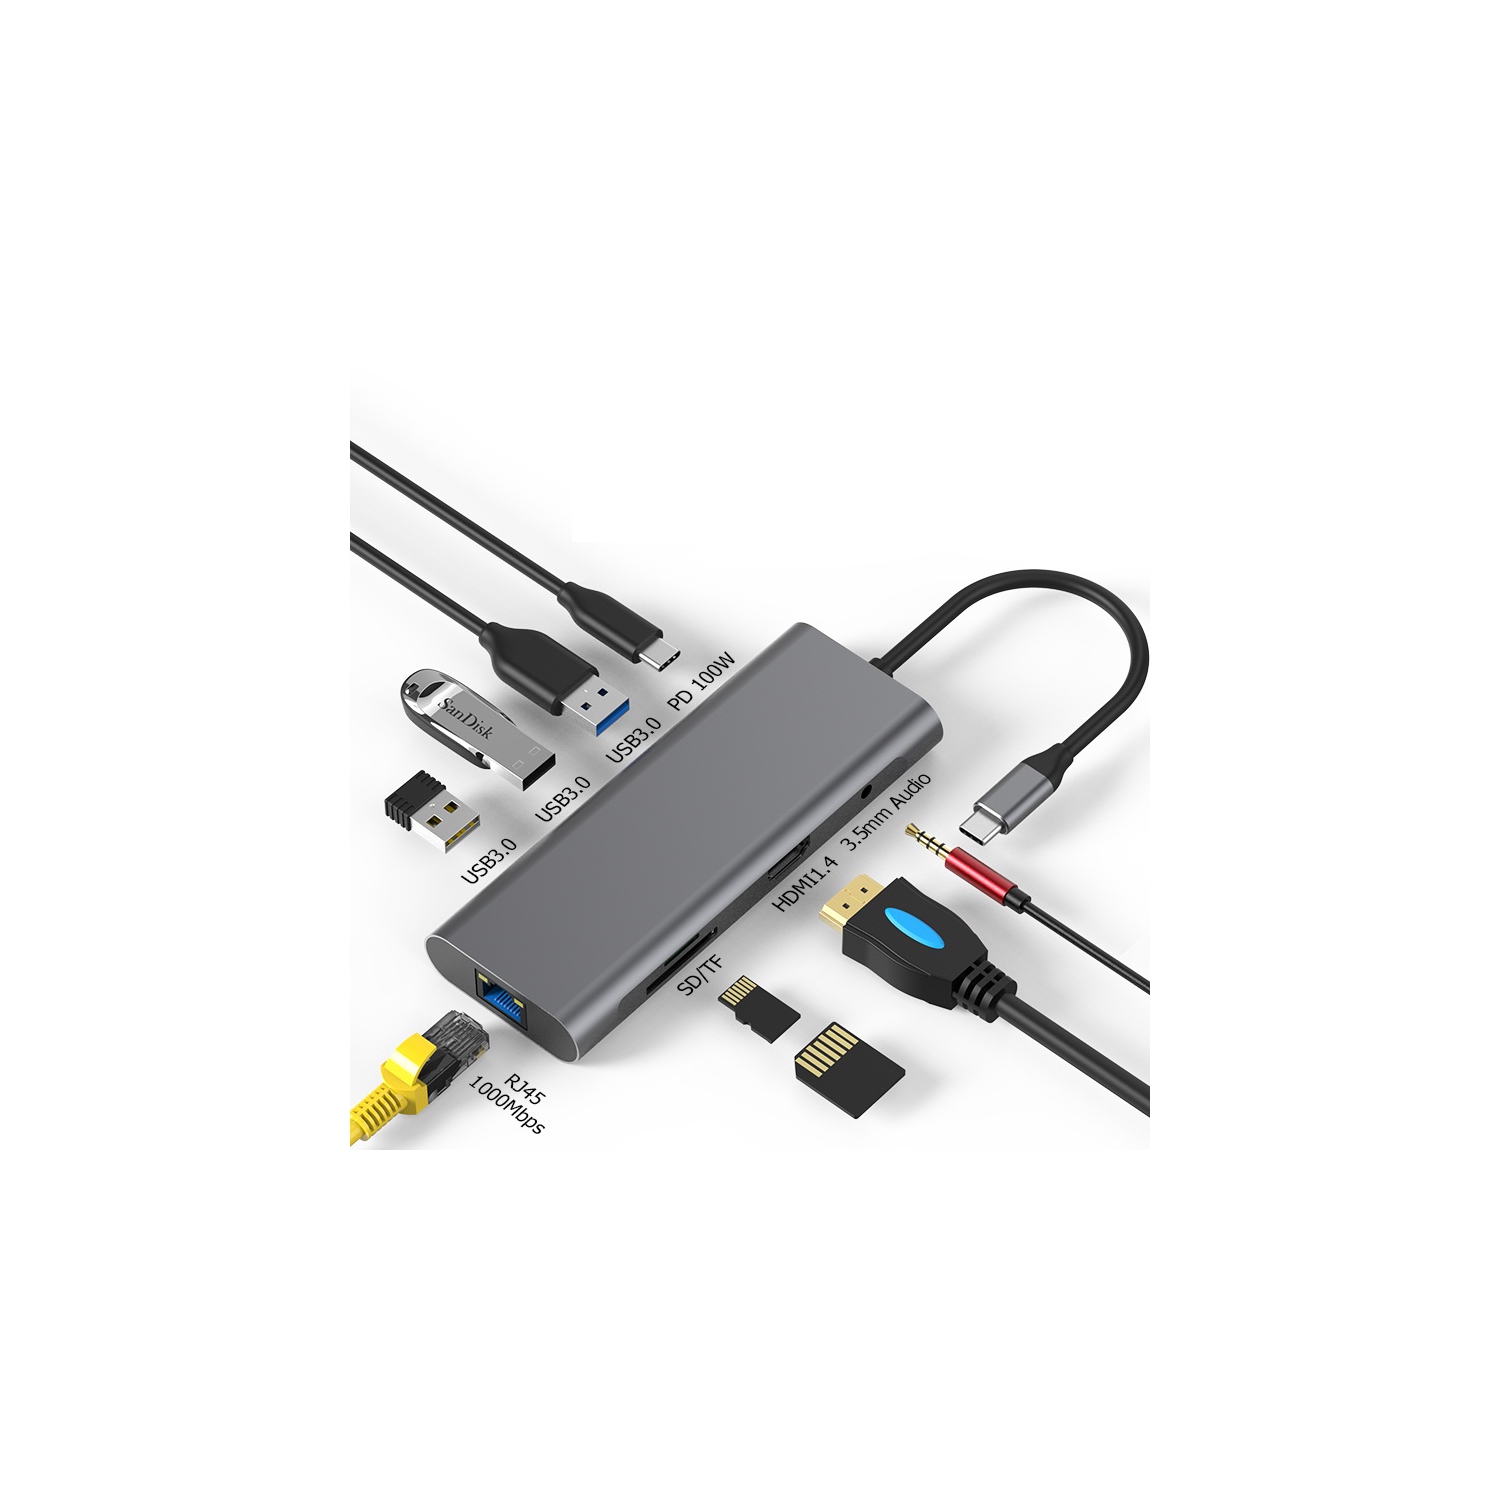 USB C Hub 9 Ports USB 3.1 Type C to USB 3.0 Hub Adapter with Micro USB for MacBook Pro, iMac, Samsung Galaxy S21 S20, LG, Google Chromebook Pixelbook, Dell XPS, Oculus Rift S, Lenovo Yoga